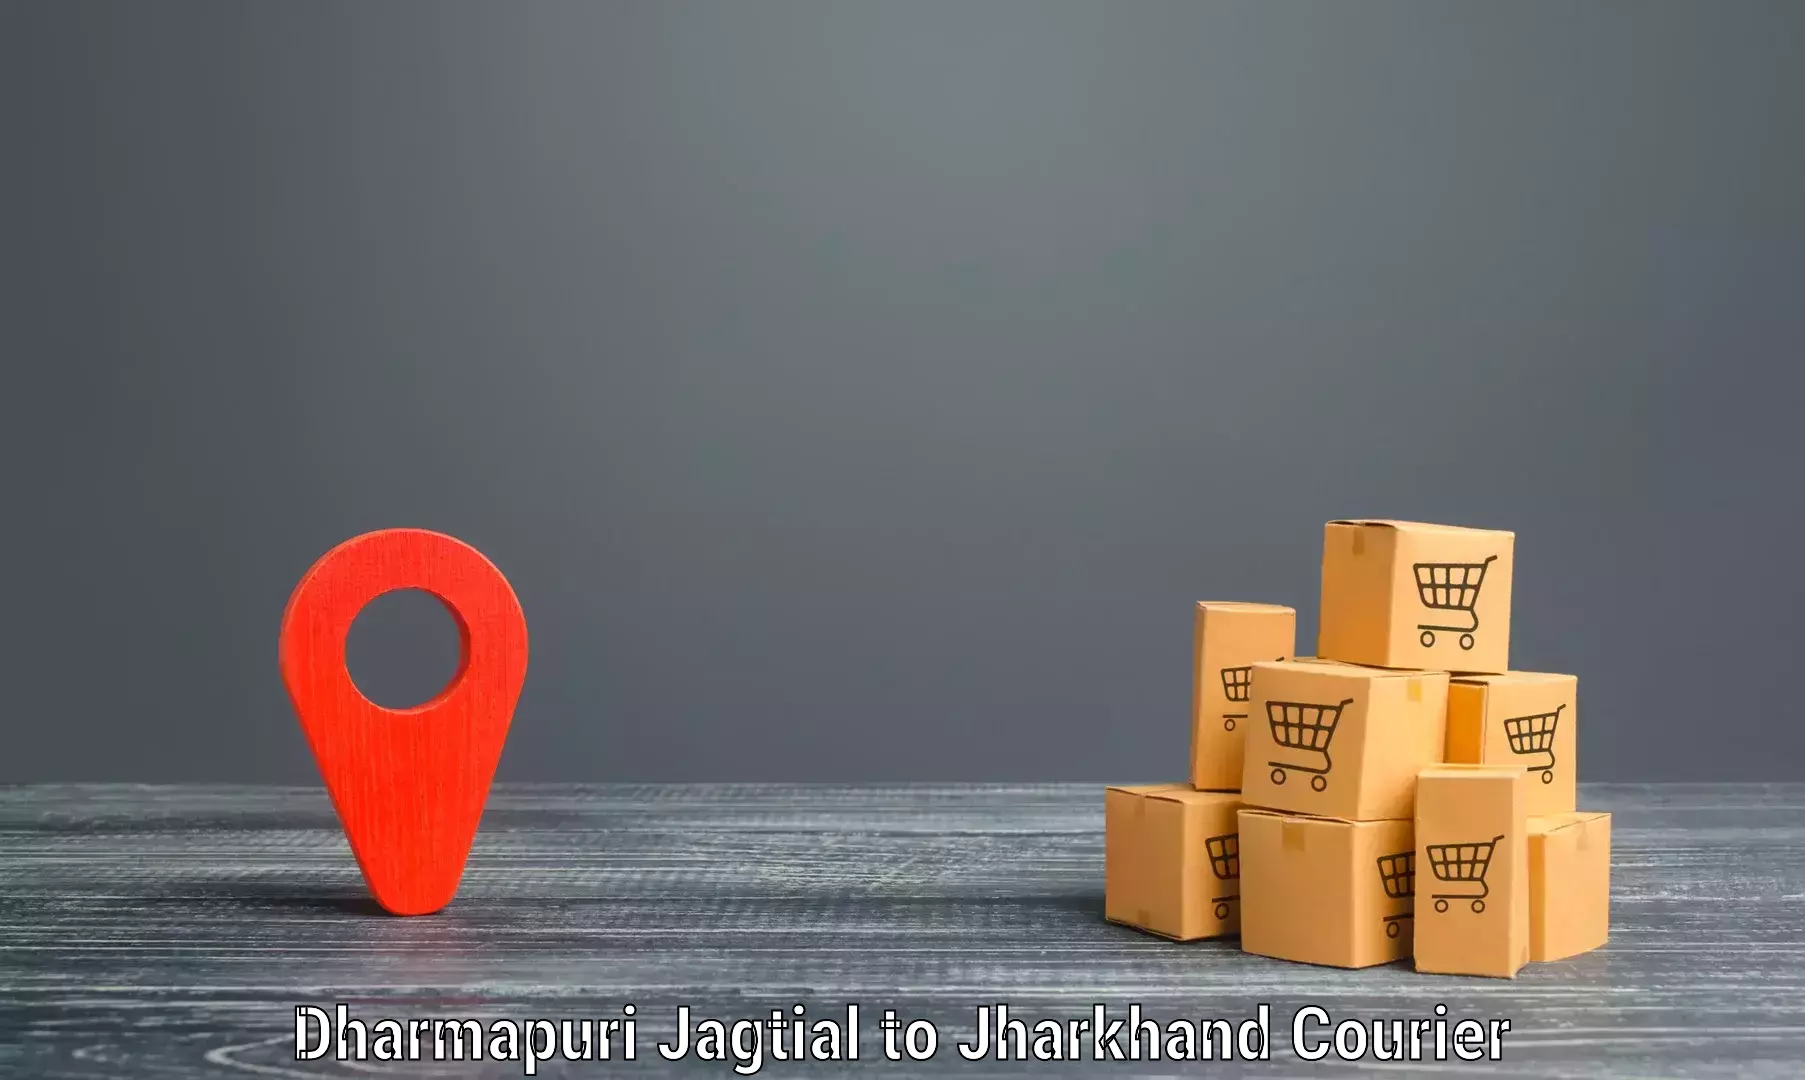 Global parcel delivery Dharmapuri Jagtial to Mahagama